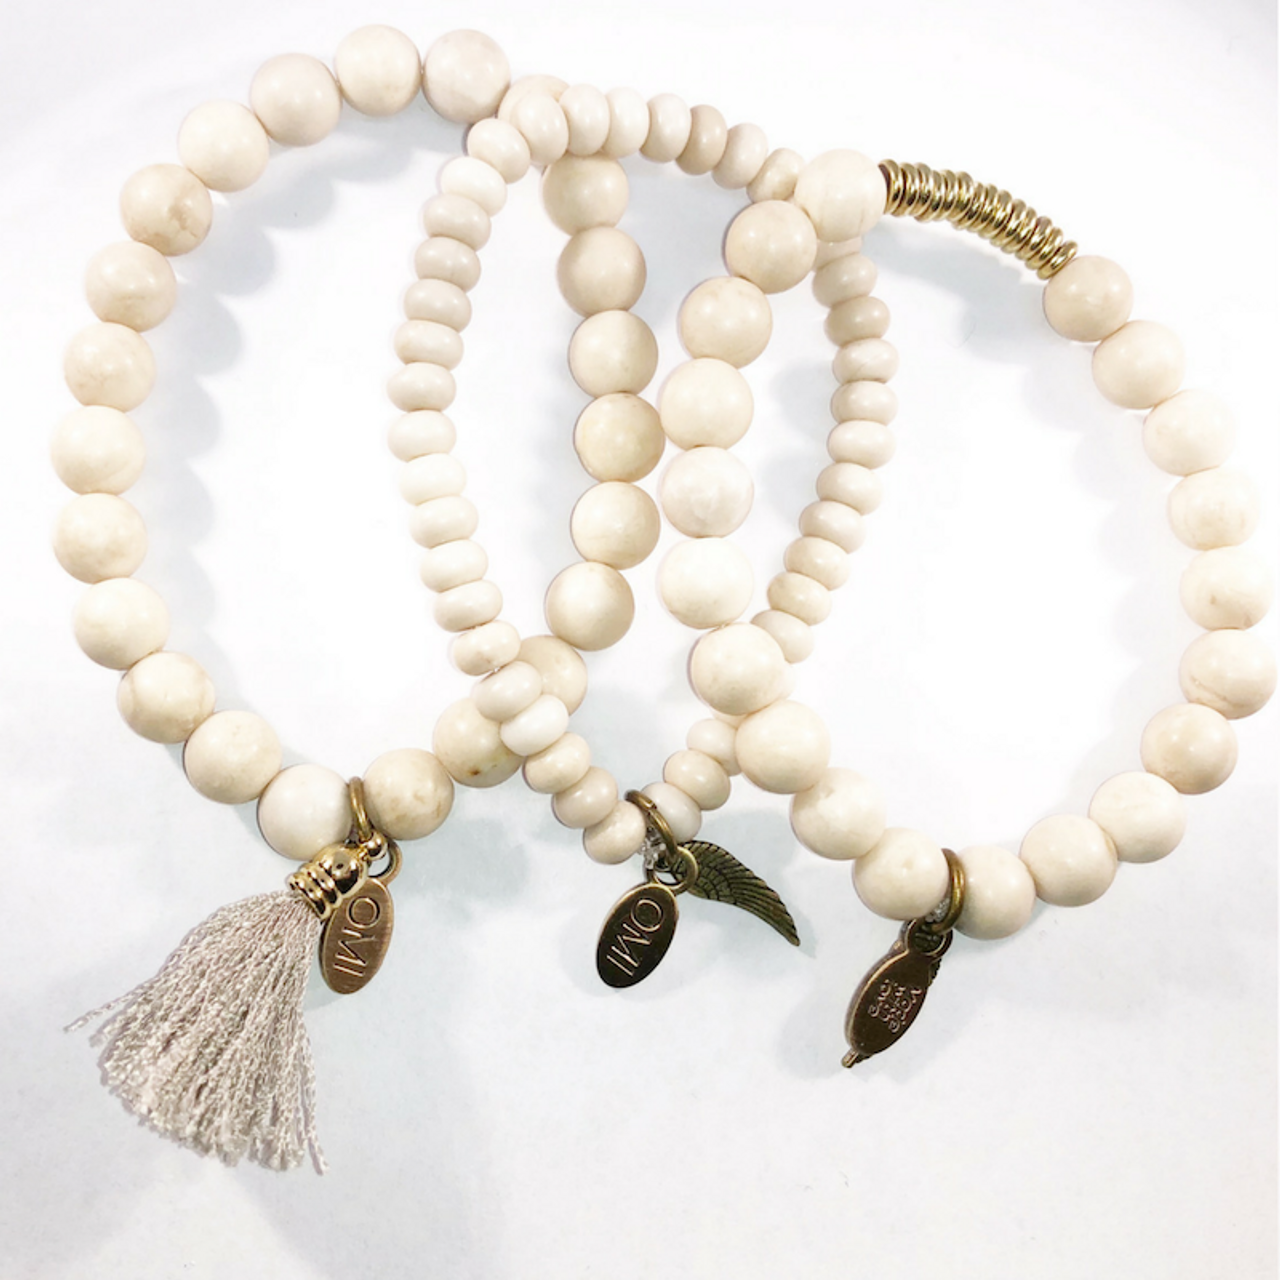 Wood Prayer Beads with Shell Covered Tassel - Cream